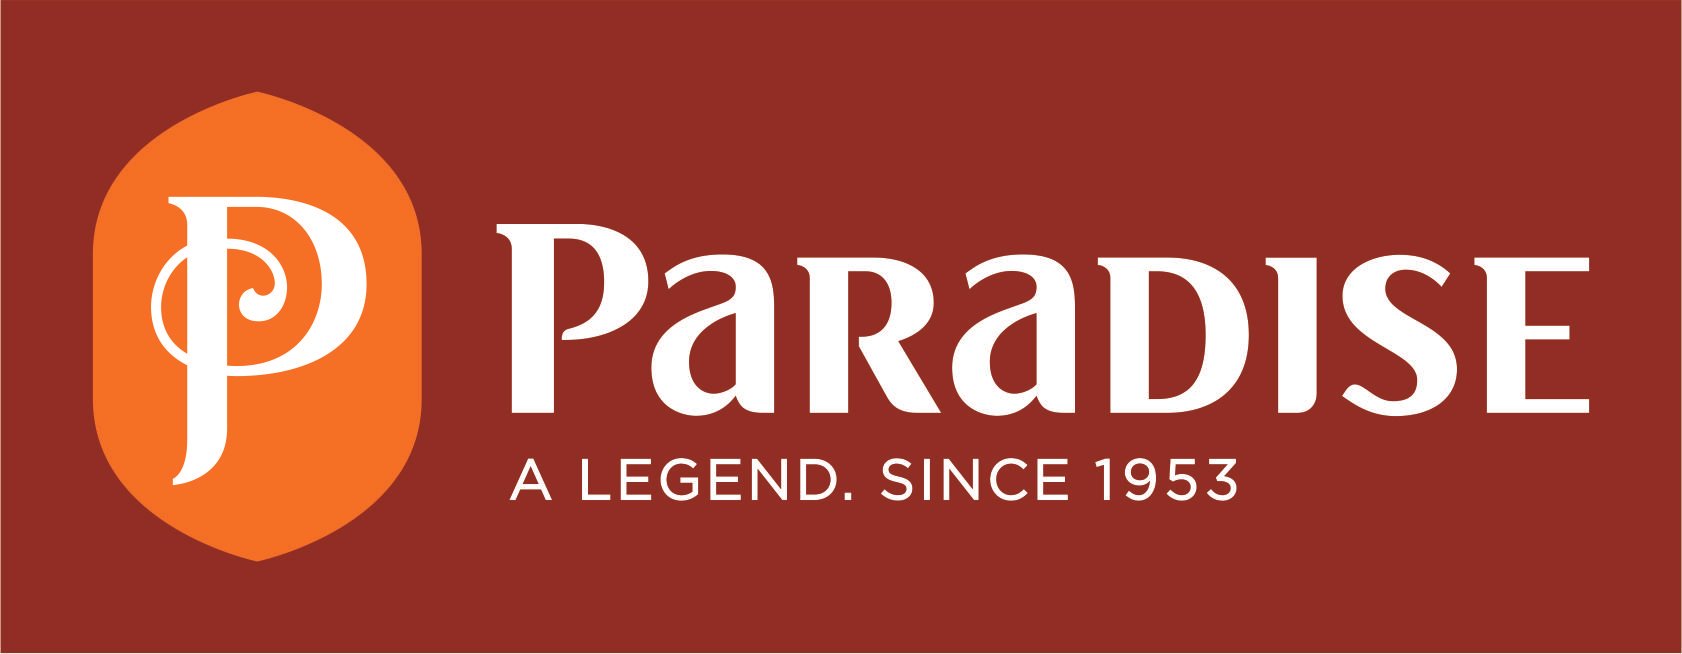 Paradise Restaurant Logo - Paradise logos. Paradise biryani. Best restaurants in india